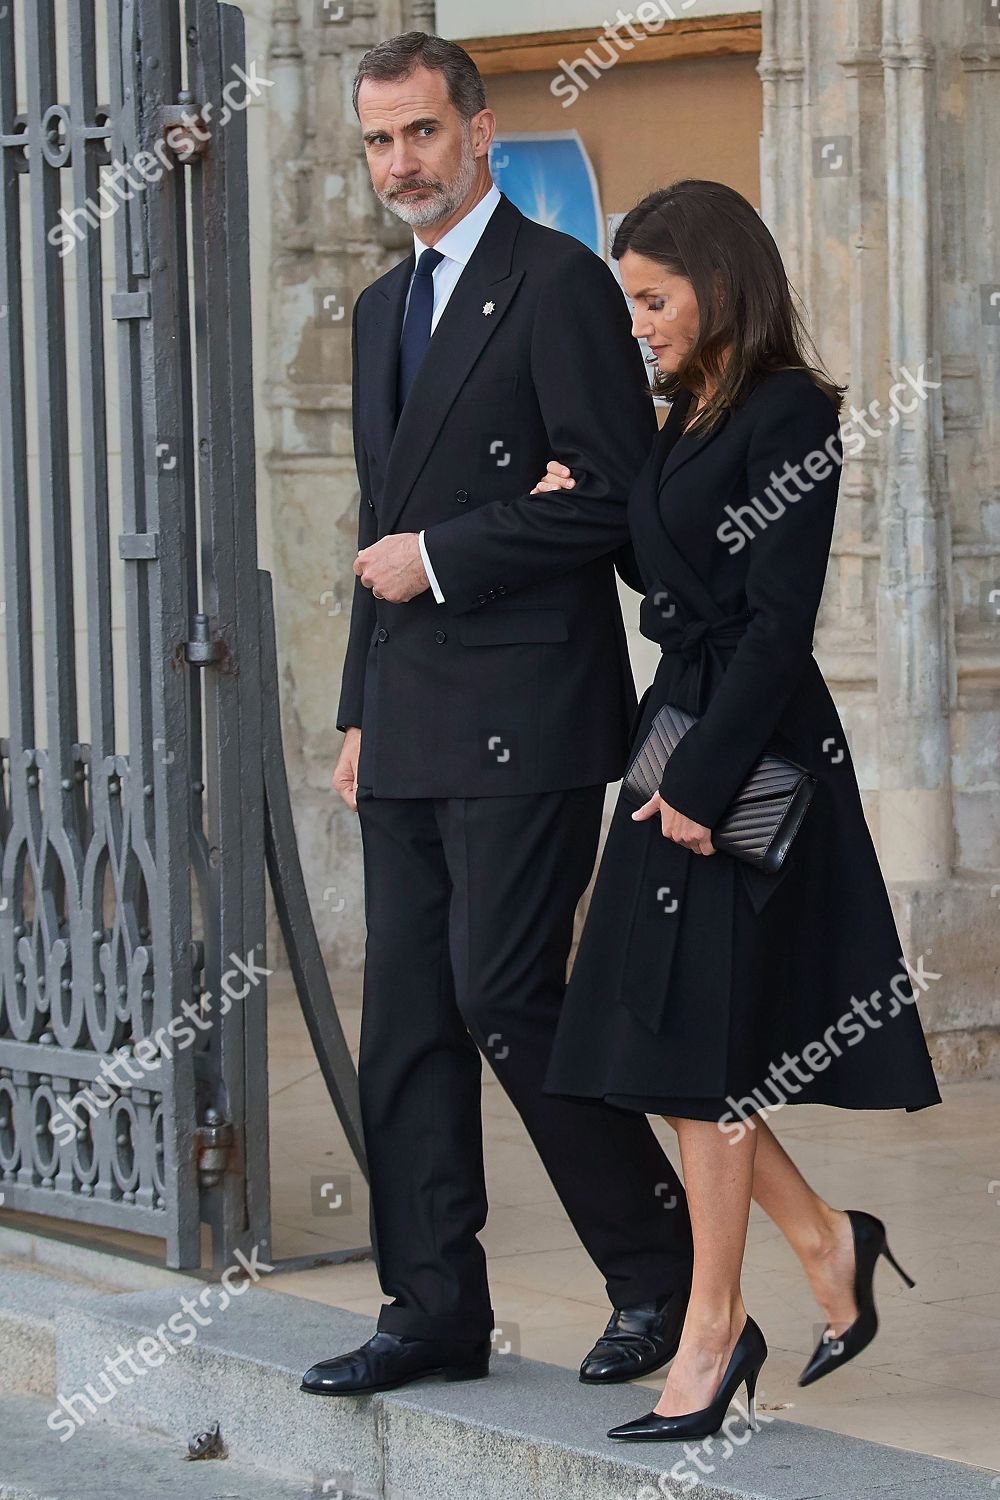 spanish-royal-couple-attend-funeral-mass-of-jose-pedro-perez-llorca-madrid-spain-shutterstock-editorial-10187228a.jpg